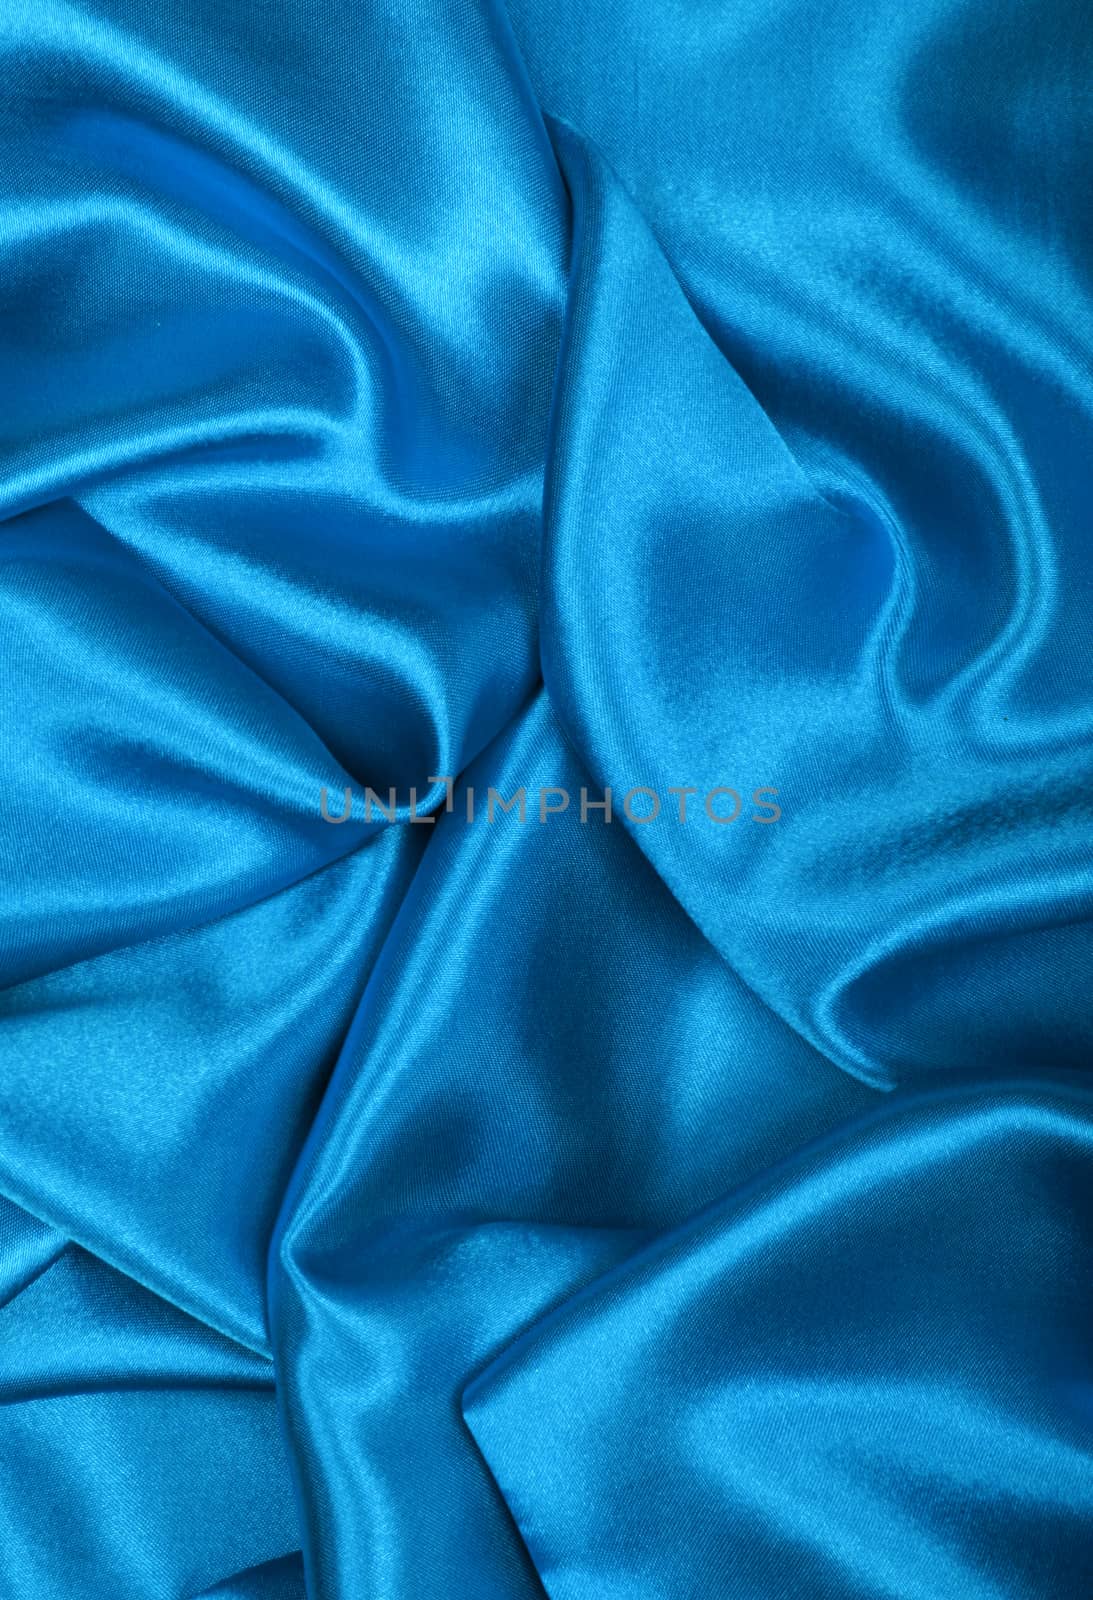 Smooth elegant blue silk as background  by oxanatravel